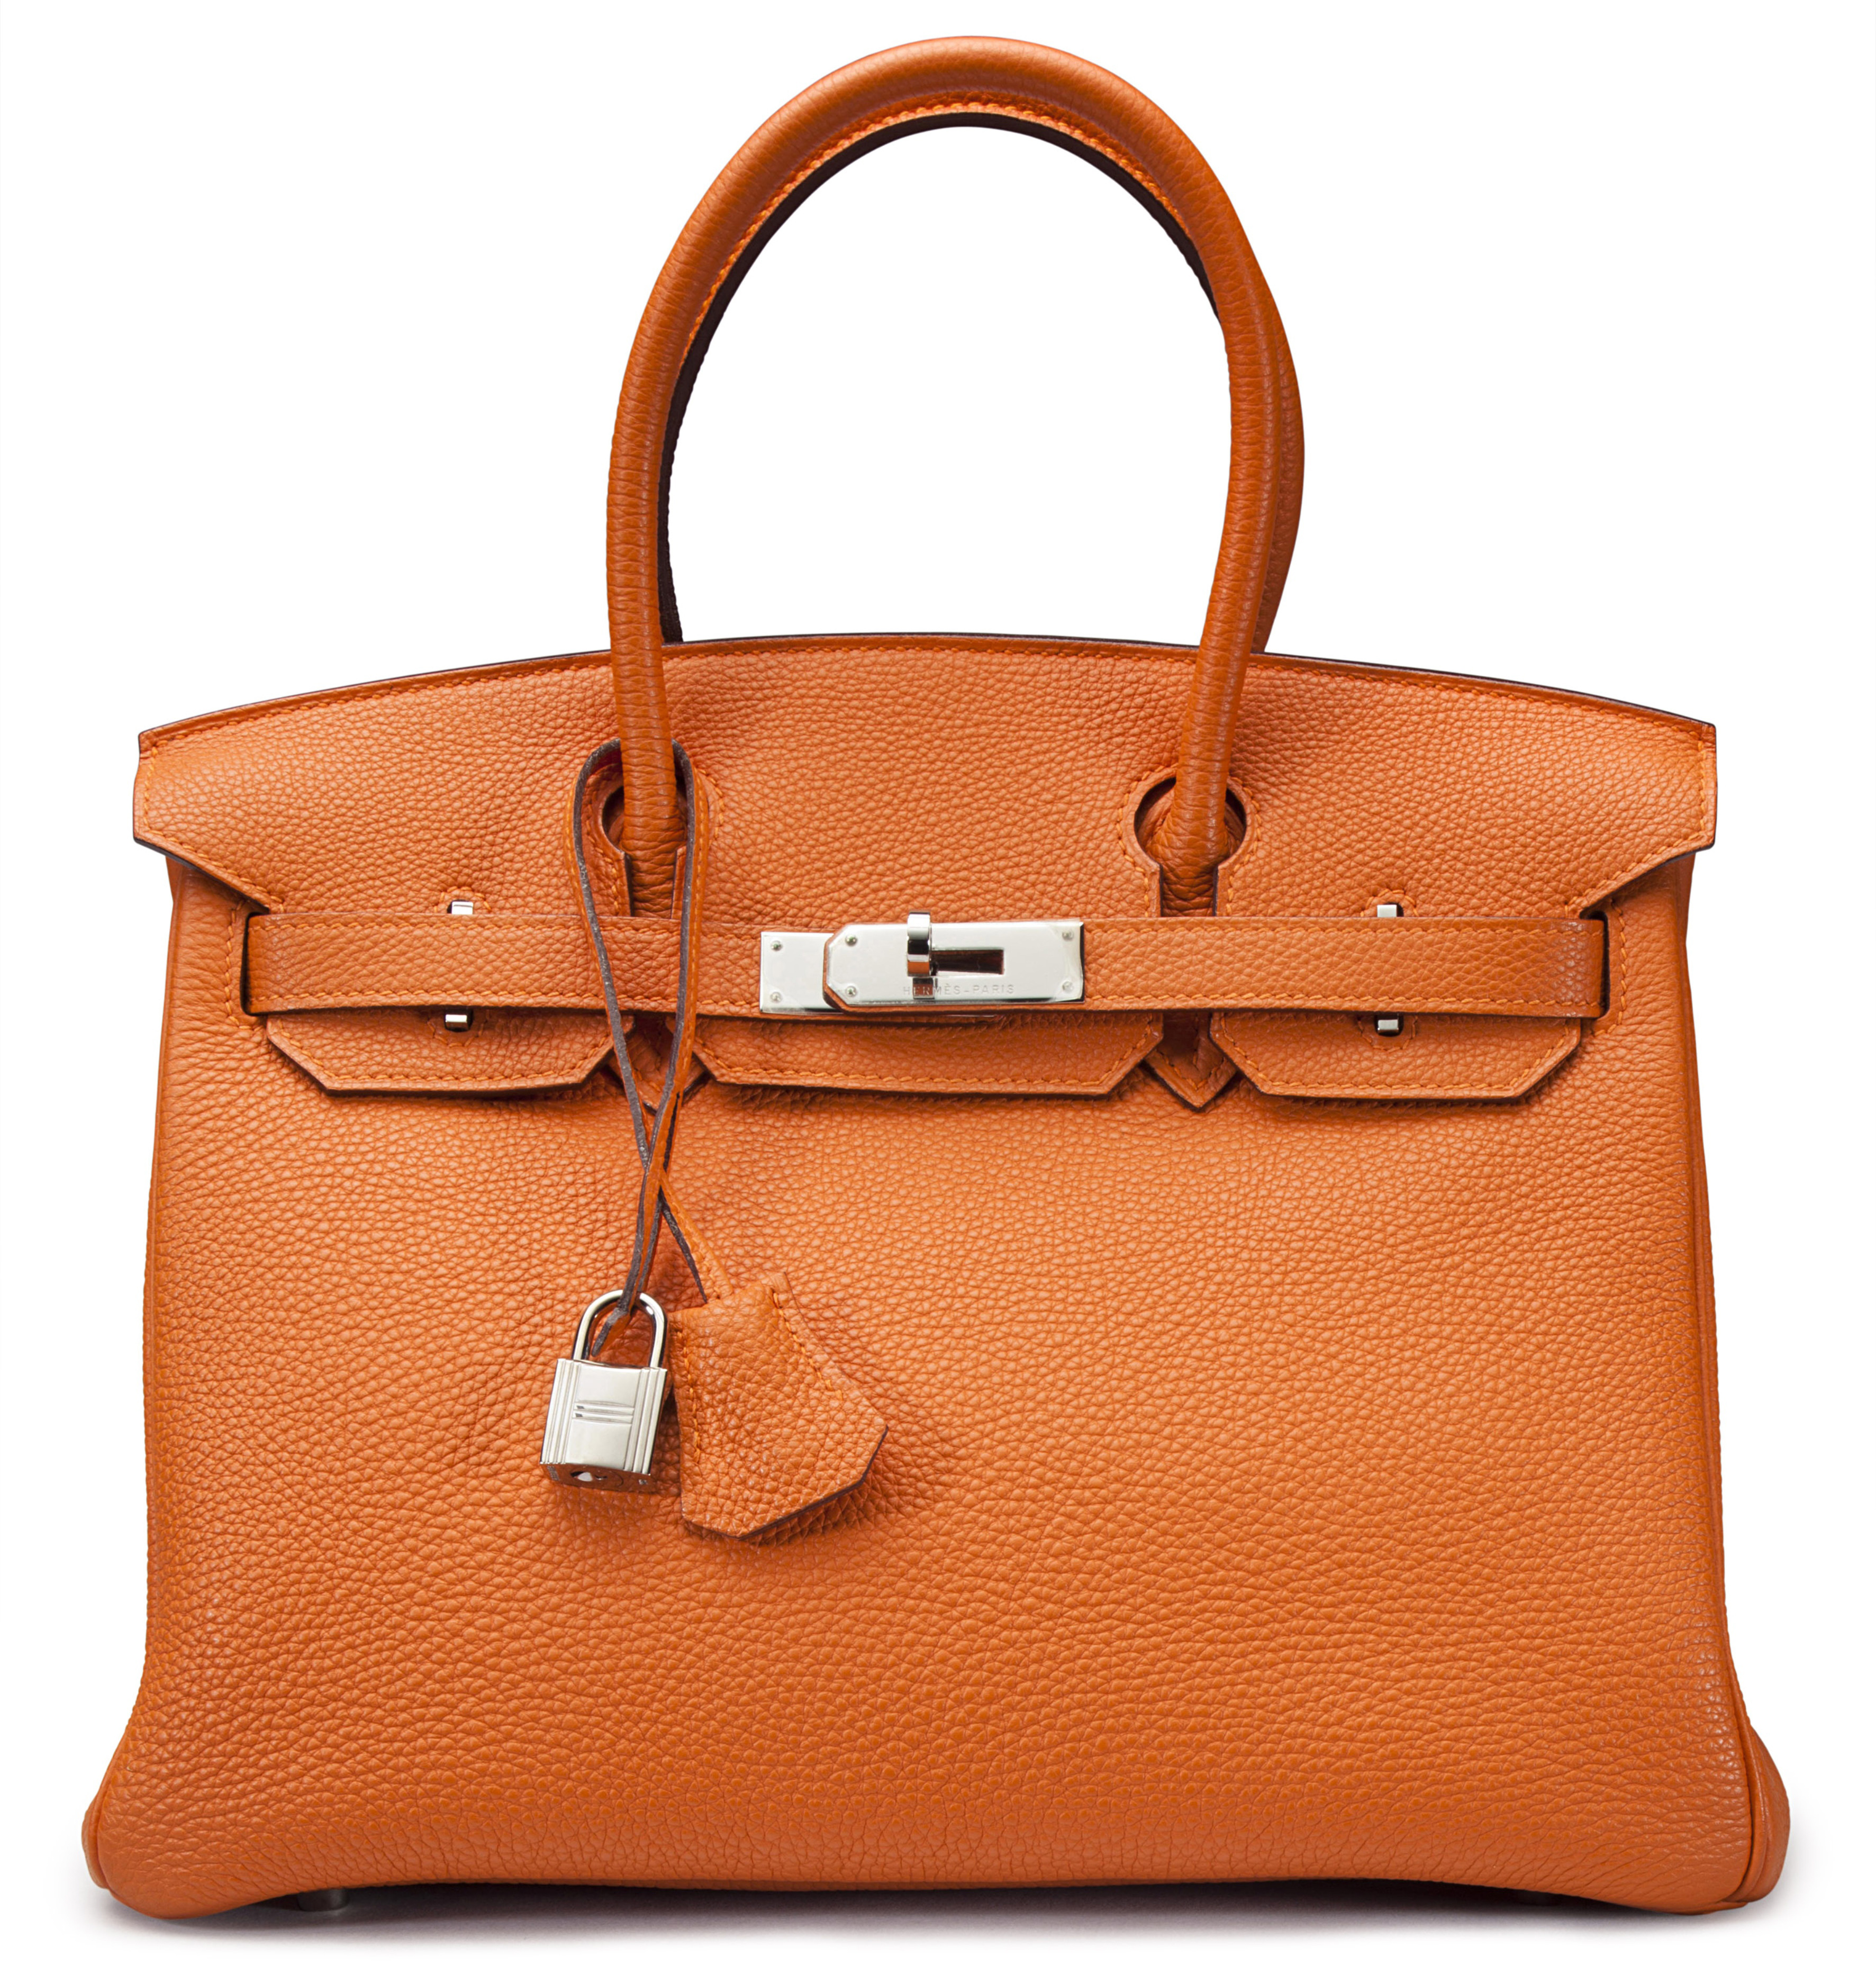 Hermes Birkin Bag Resale Value | IQS Executive